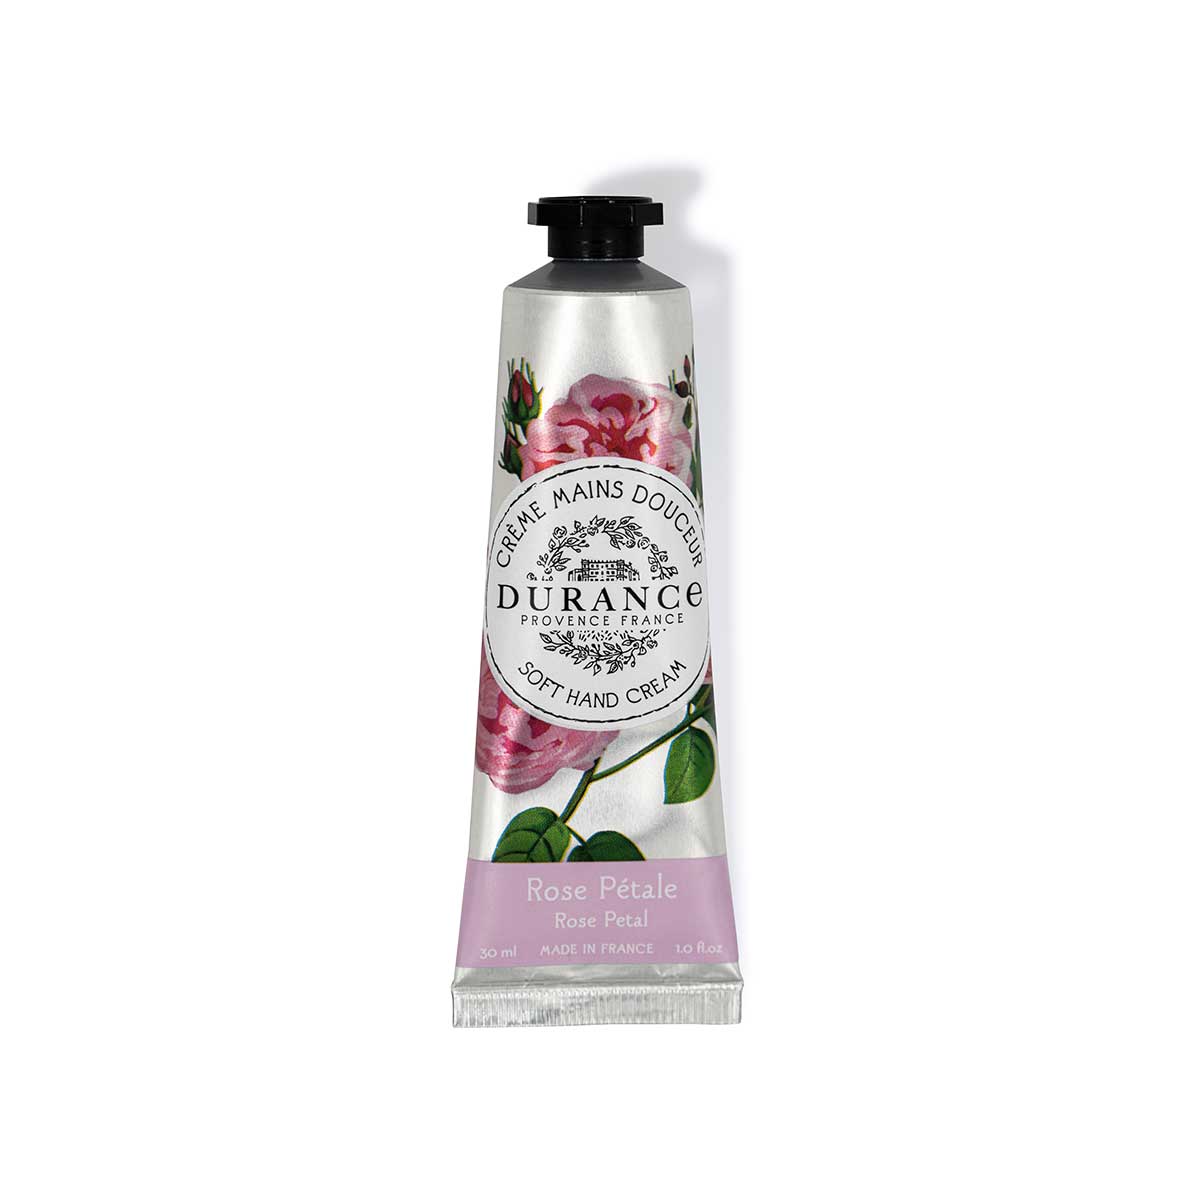 Hand Cream Rose petal 30ml